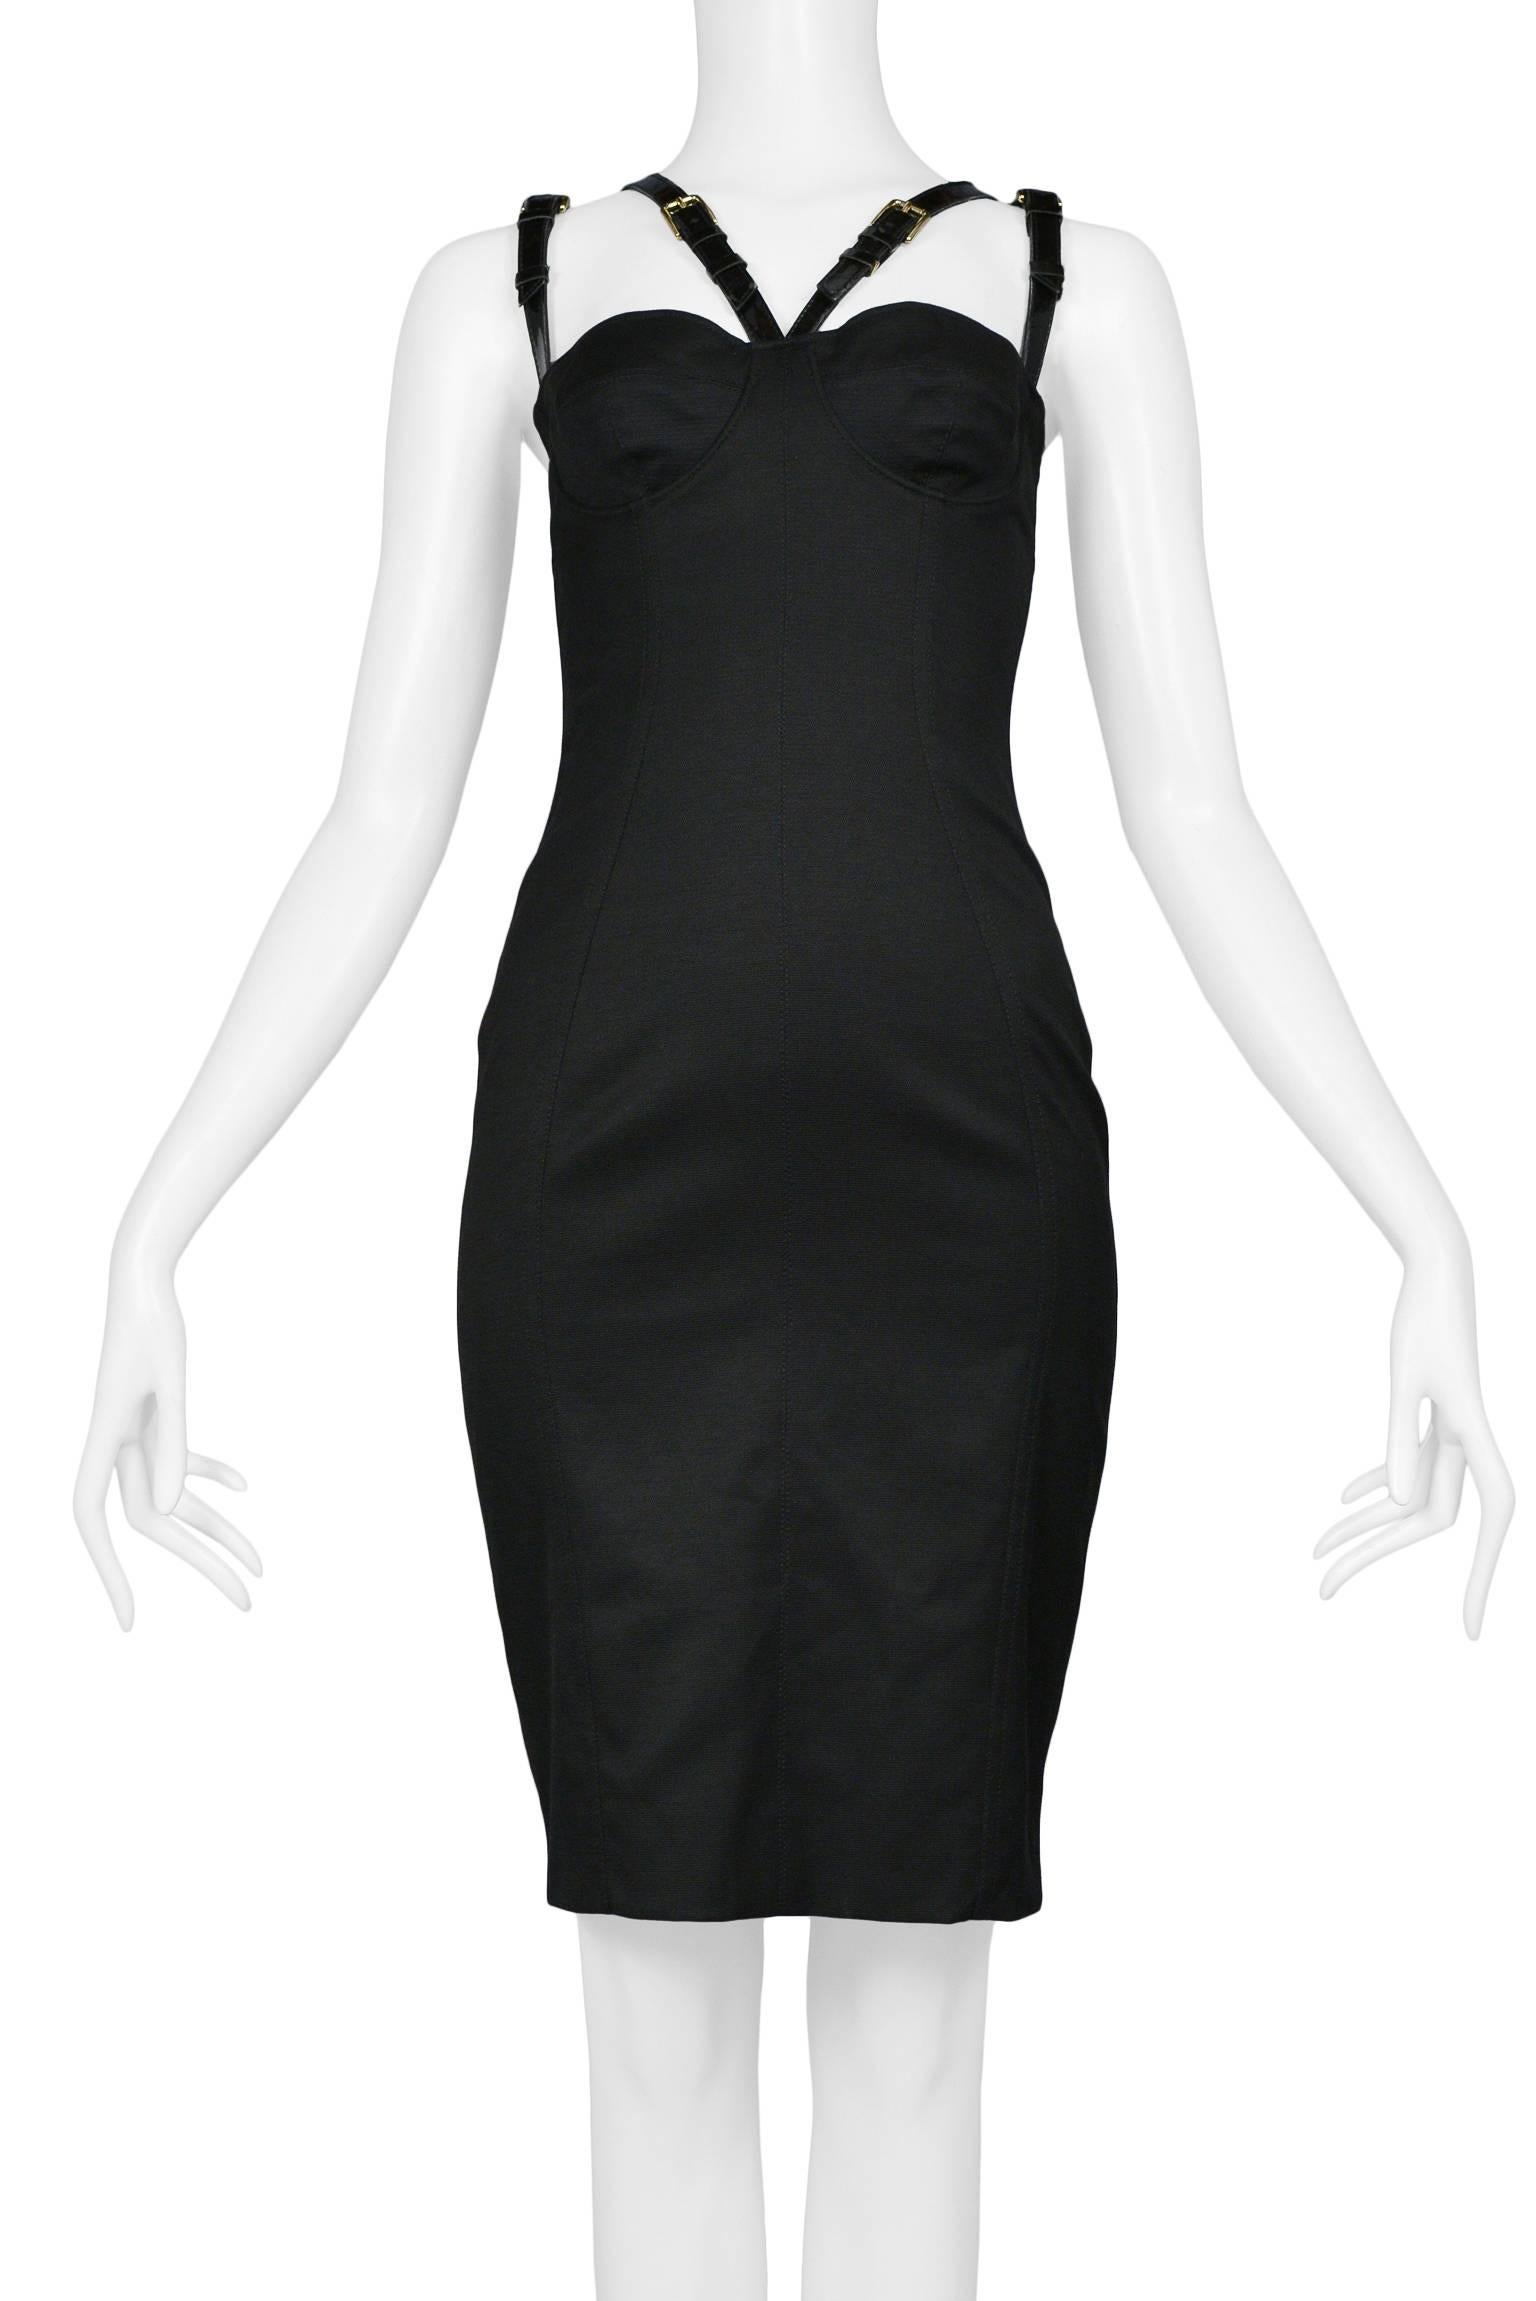 Dolce & Gabbana Black Bondage Bustier Dress w Double V Patent Straps 2007 1